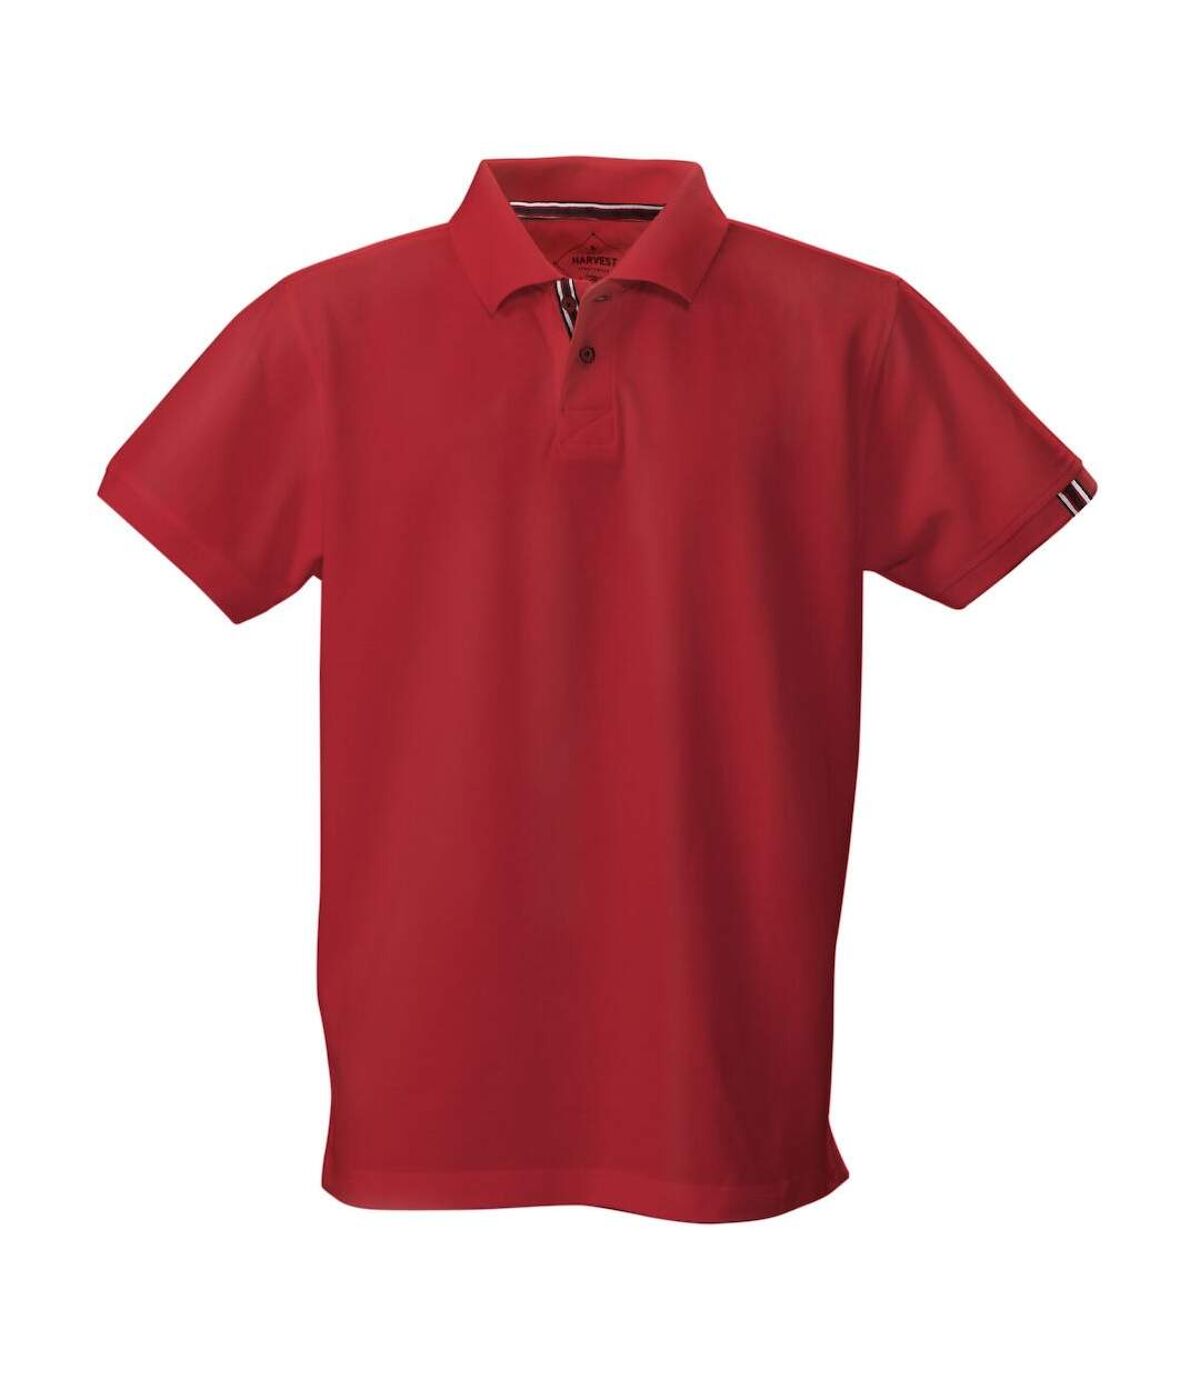 Harvest Mens Avon Polo Shirt (Red)